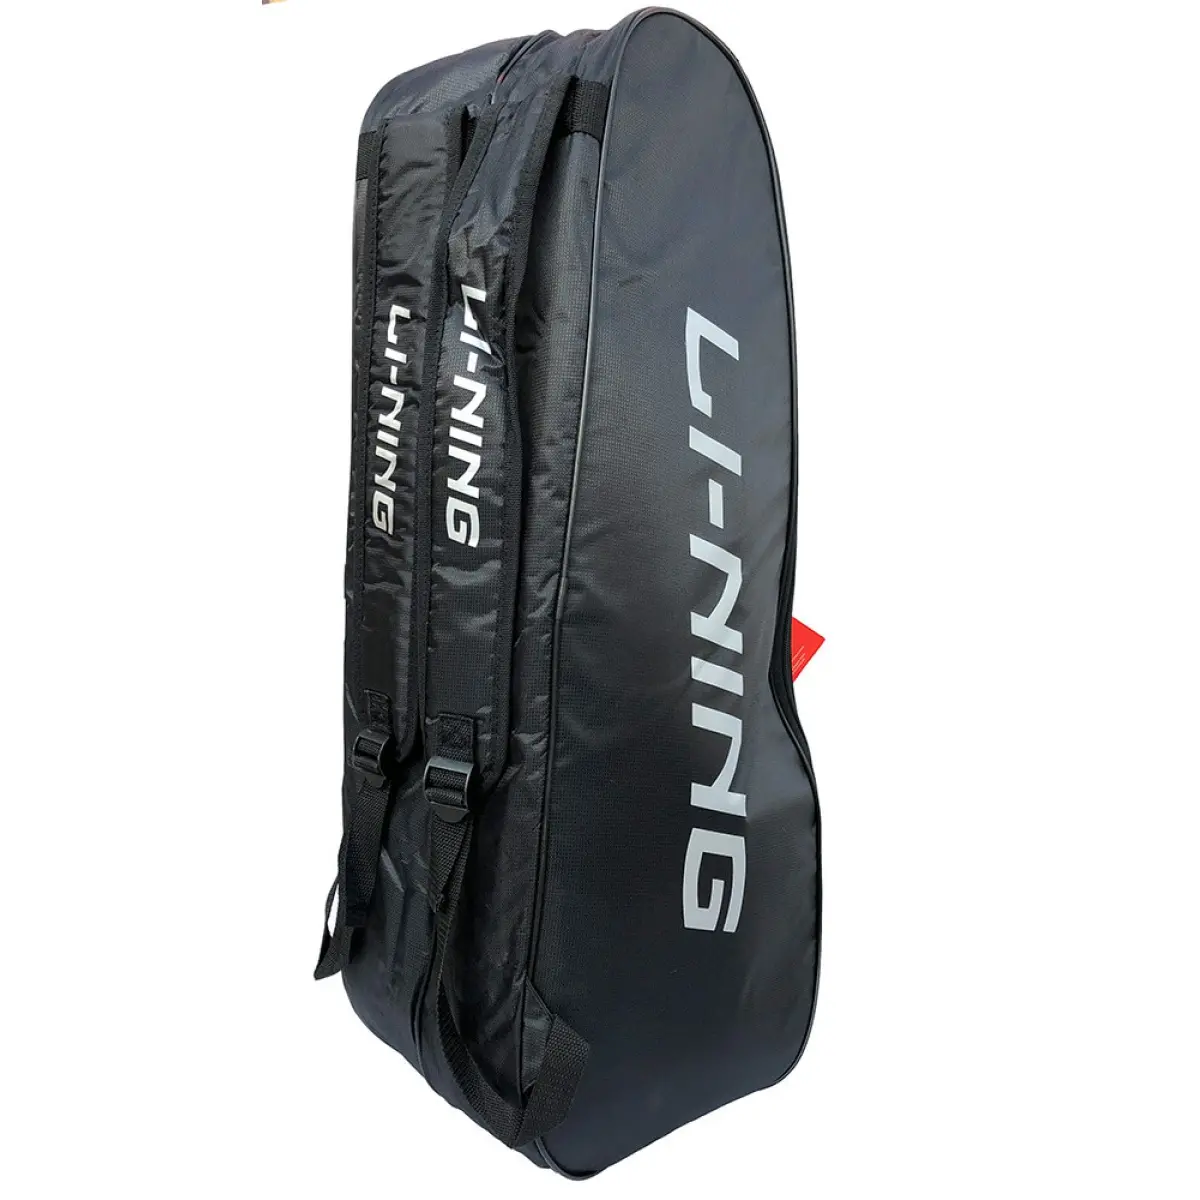 Buy Lining badminton kit bag Online in India  Sports Galaxy